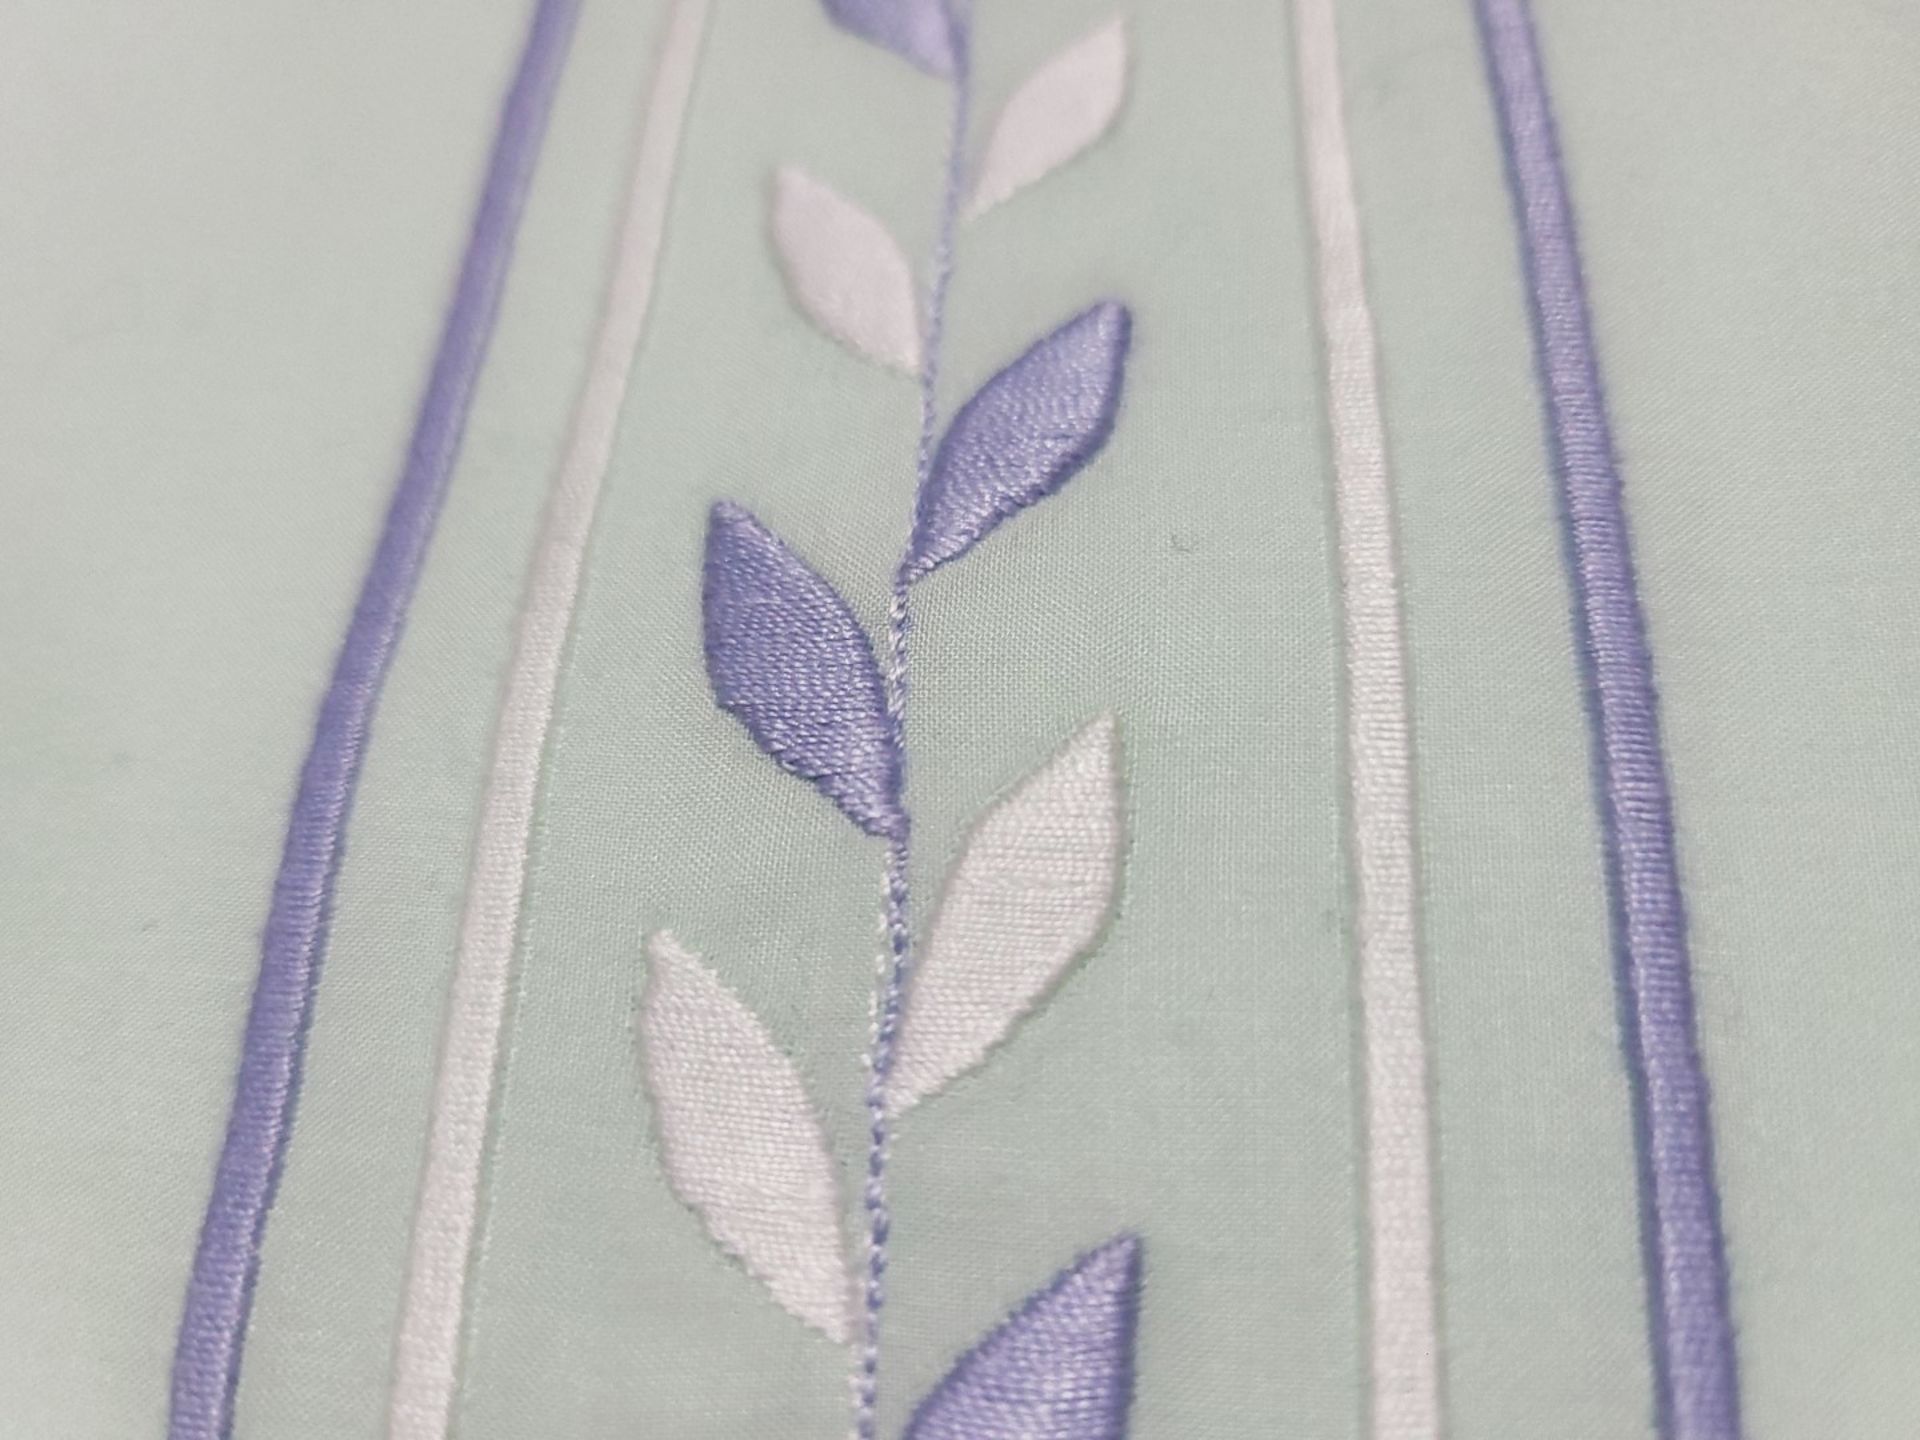 Set of 2 x PRATESI 'Impero' Blue & White Embroidered & Hem Stitched Teal Pillow Shams - Image 4 of 4